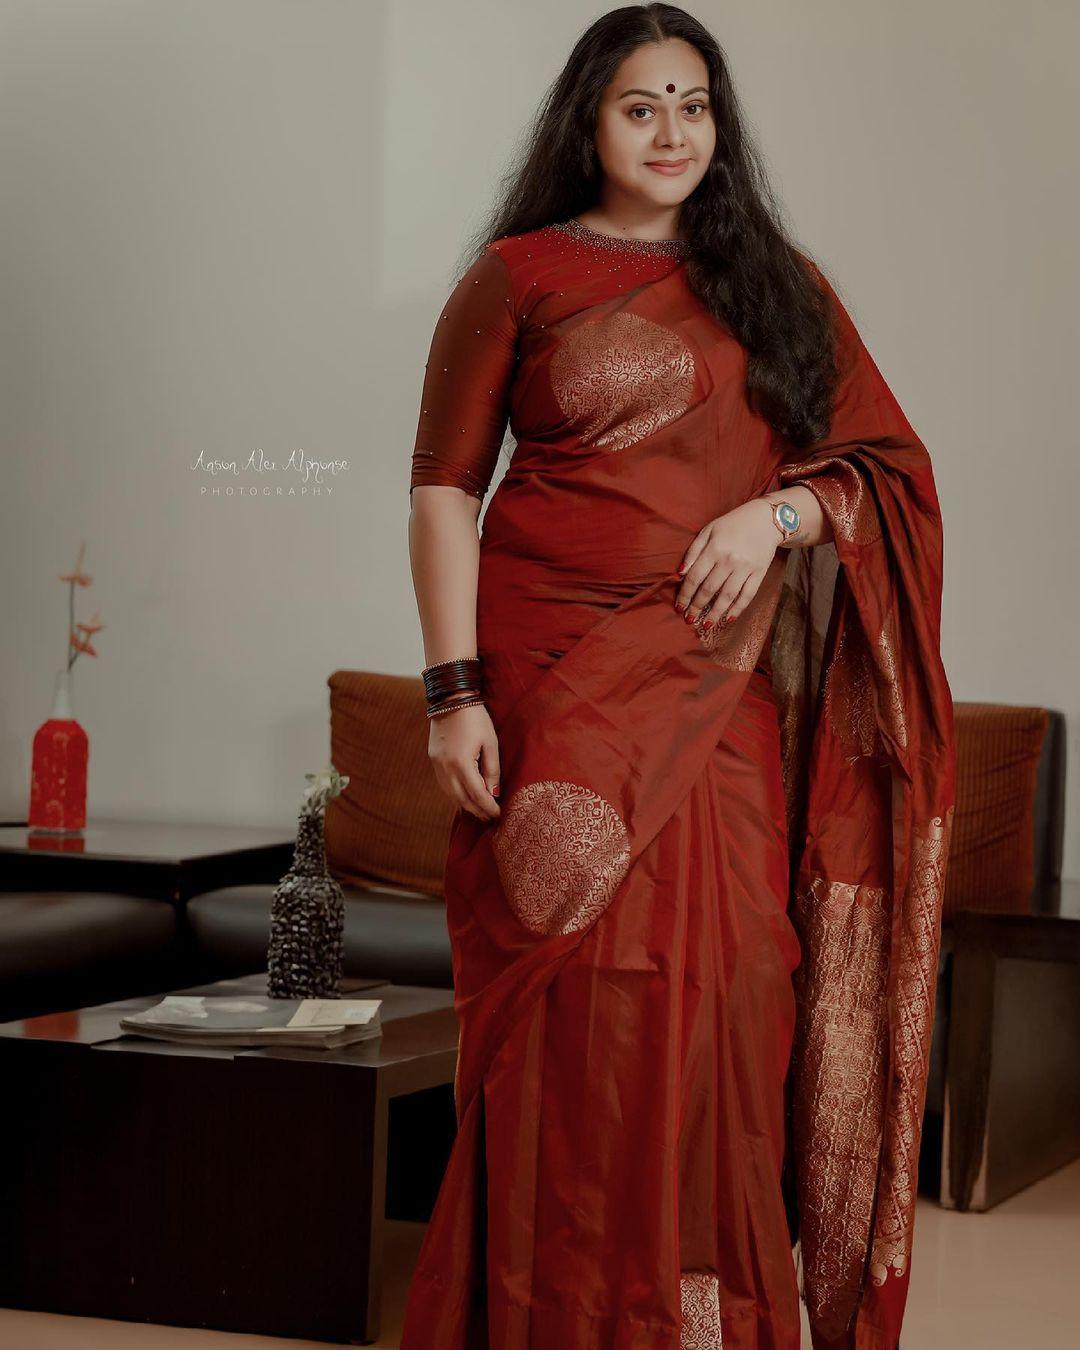 Saree hot photos gallery | Rekha Ratheesh beautiful and spicy photos  gallery Photos: HD Images, Pictures, Stills, First Look Posters of Saree hot  photos gallery | Rekha Ratheesh beautiful and spicy photos